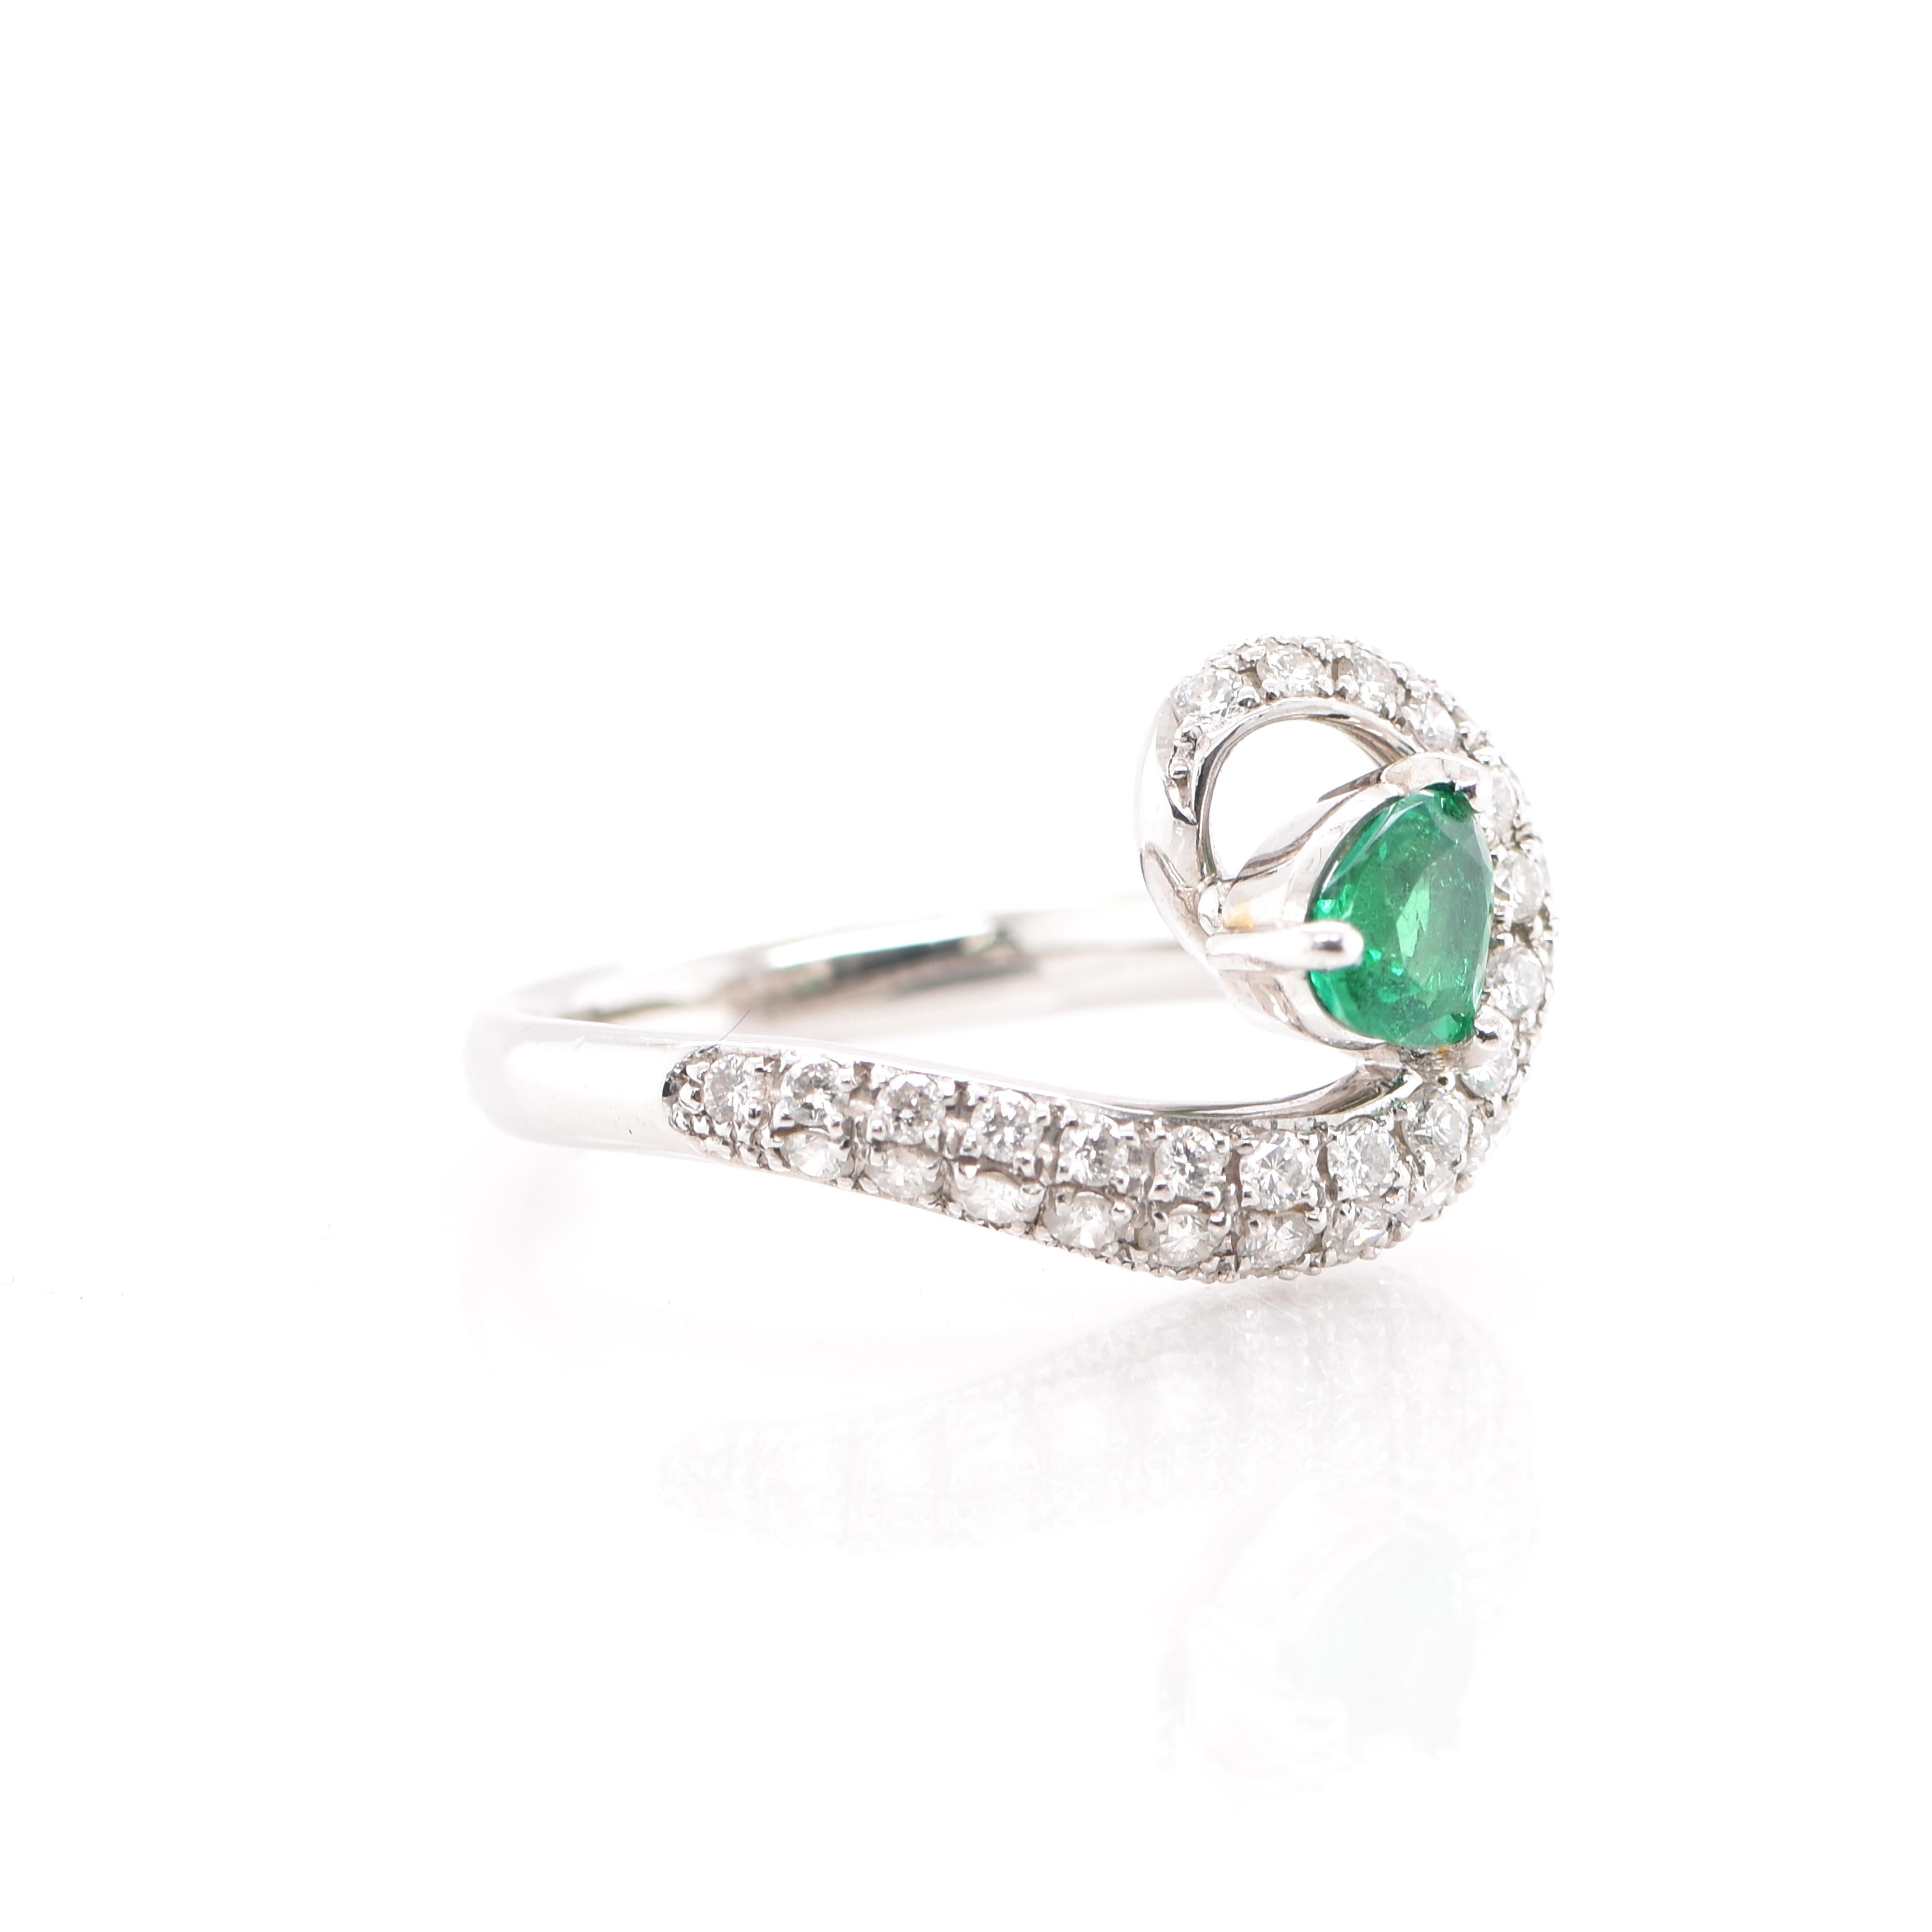 Modern 0.64 Carat Natural Emerald and Diamond Ring Set in Platinum